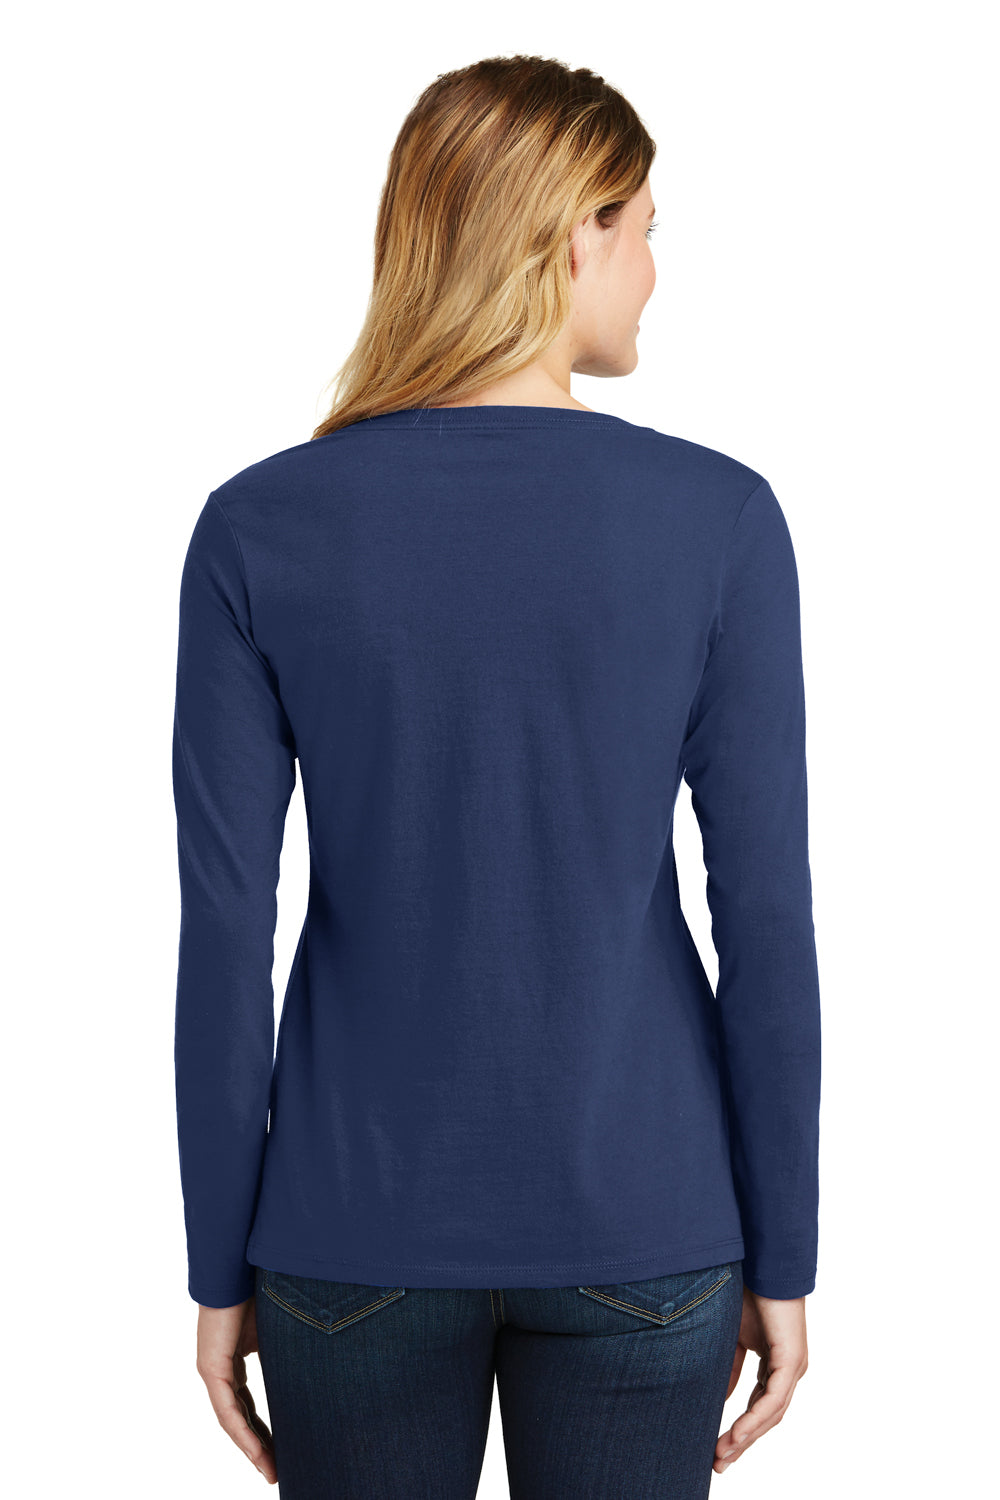 Port & Company LPC450VLS Womens Fan Favorite Long Sleeve V-Neck T-Shirt Navy Blue Back